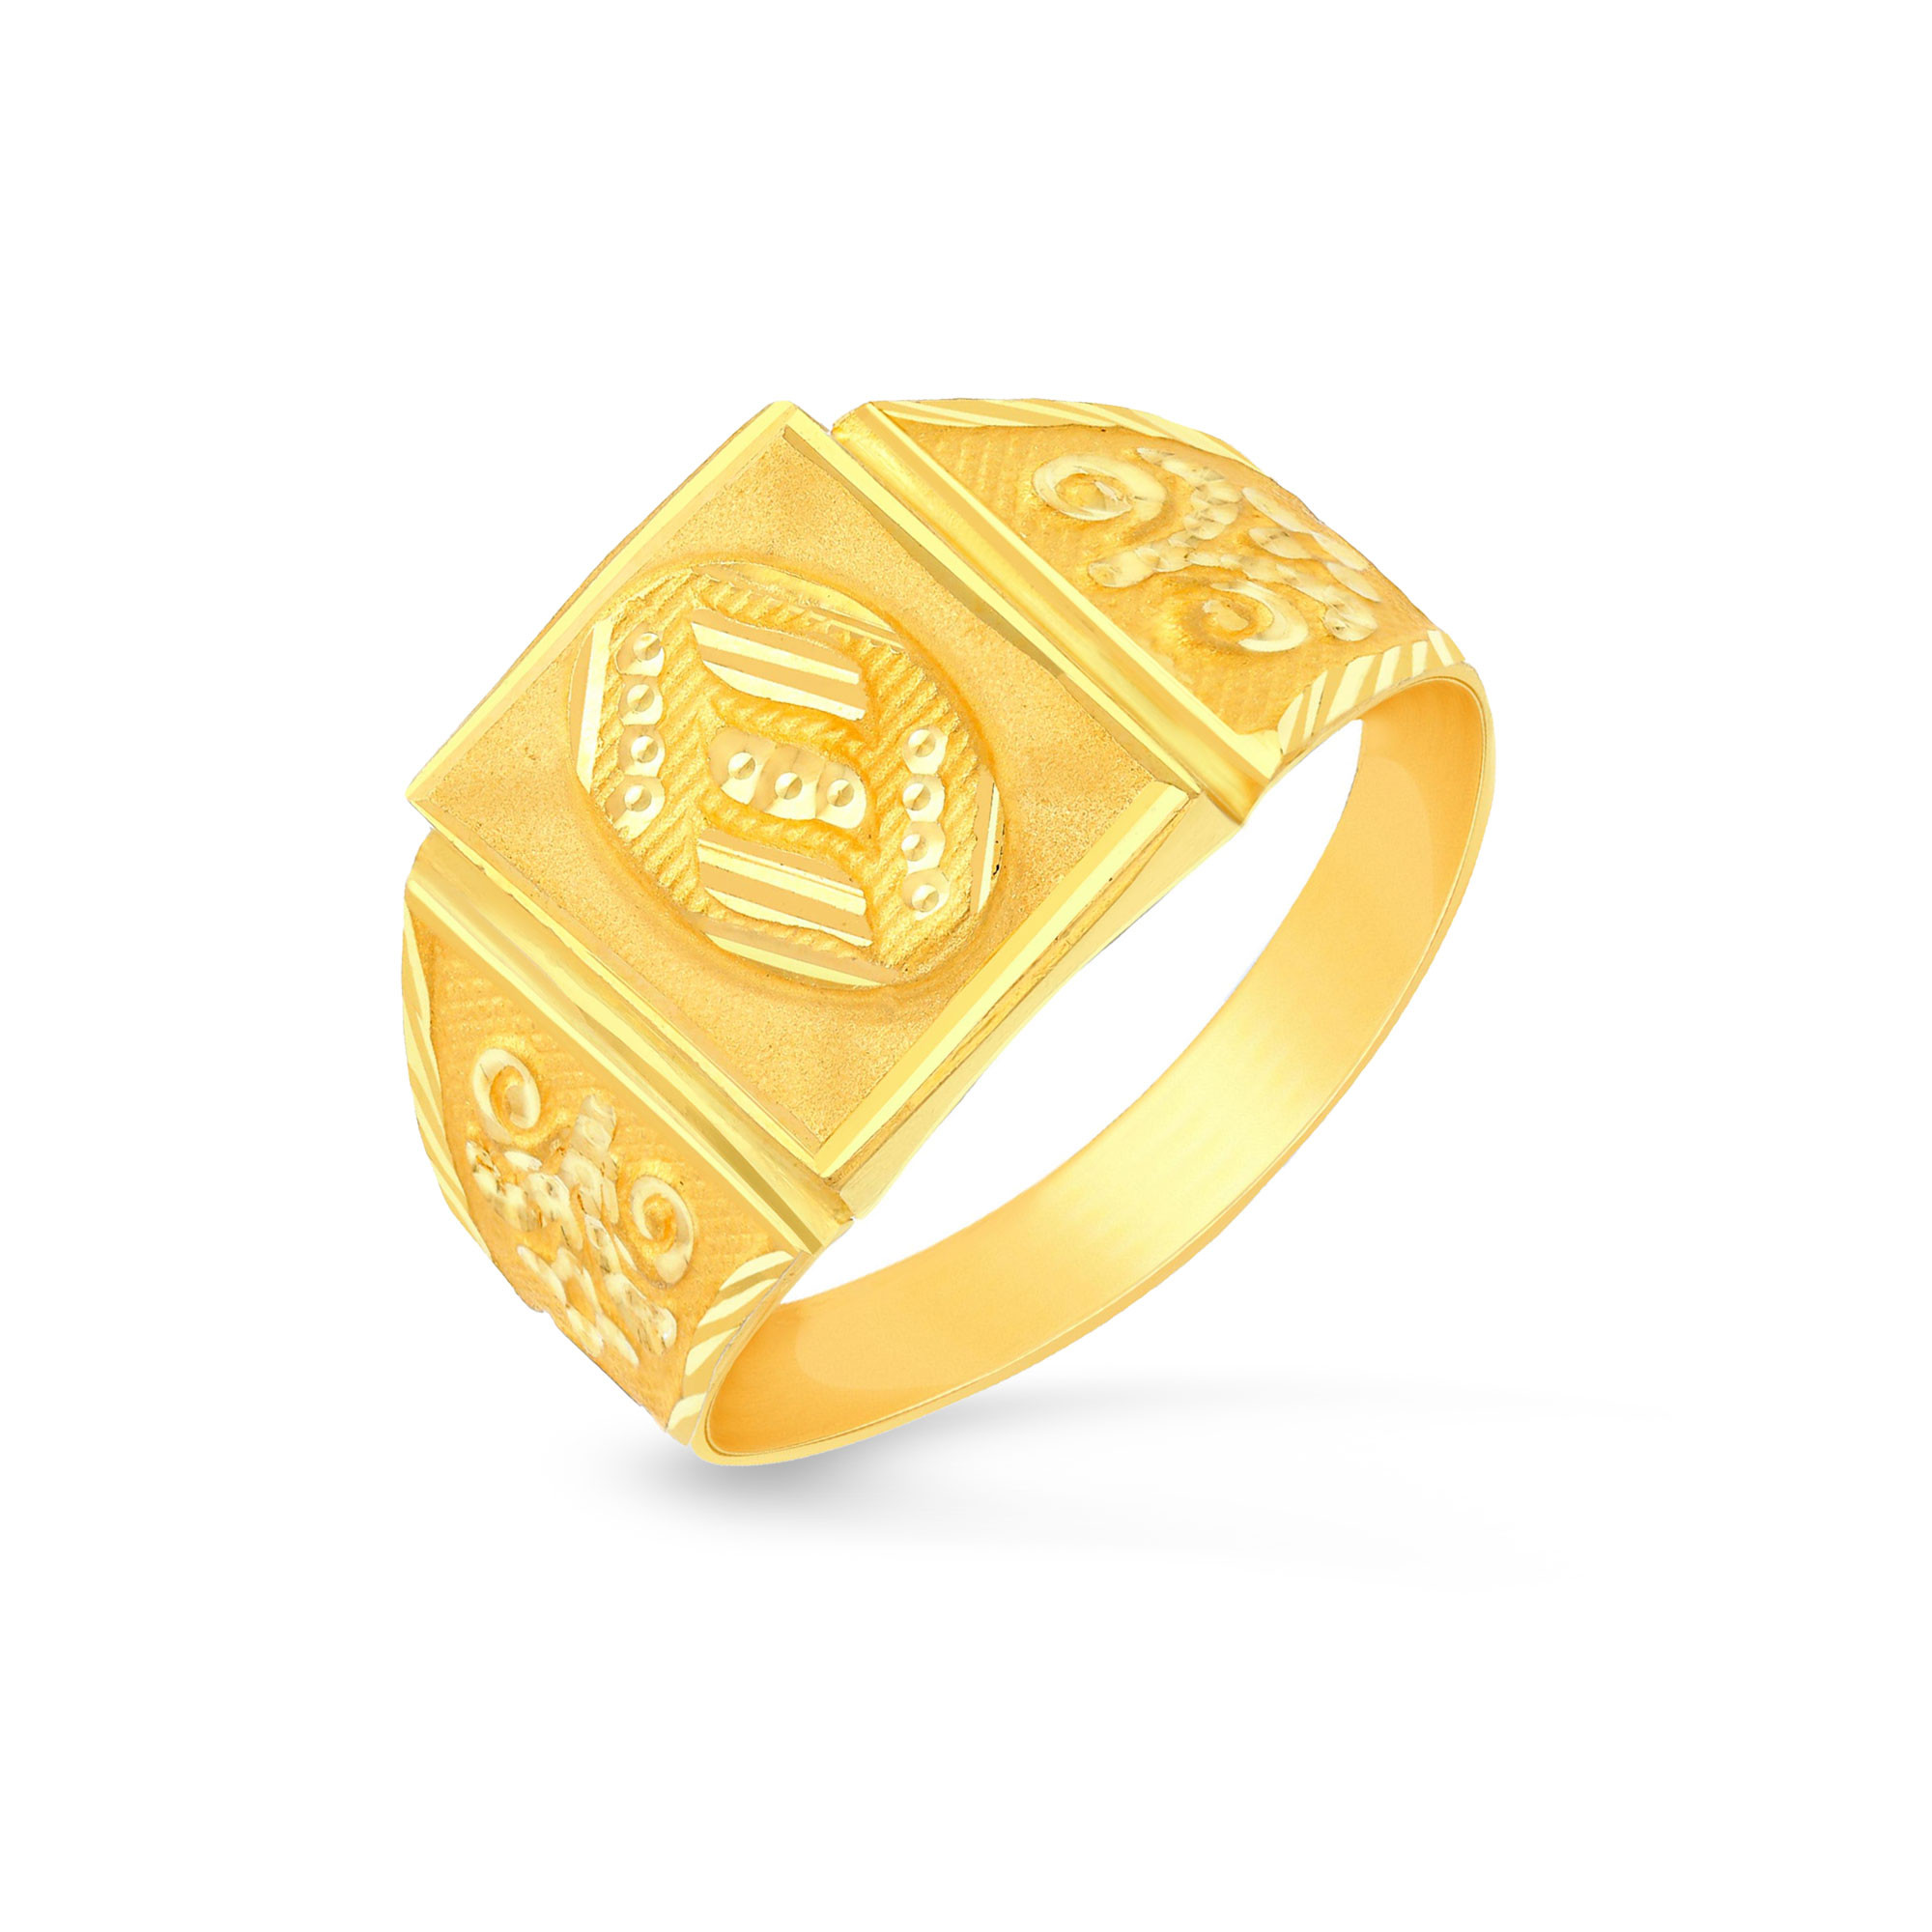 Top 10 Traditional Gold Rings for Men | Lord Balaji, Ganesha God Ring  Designs | Mens Rings - YouTube